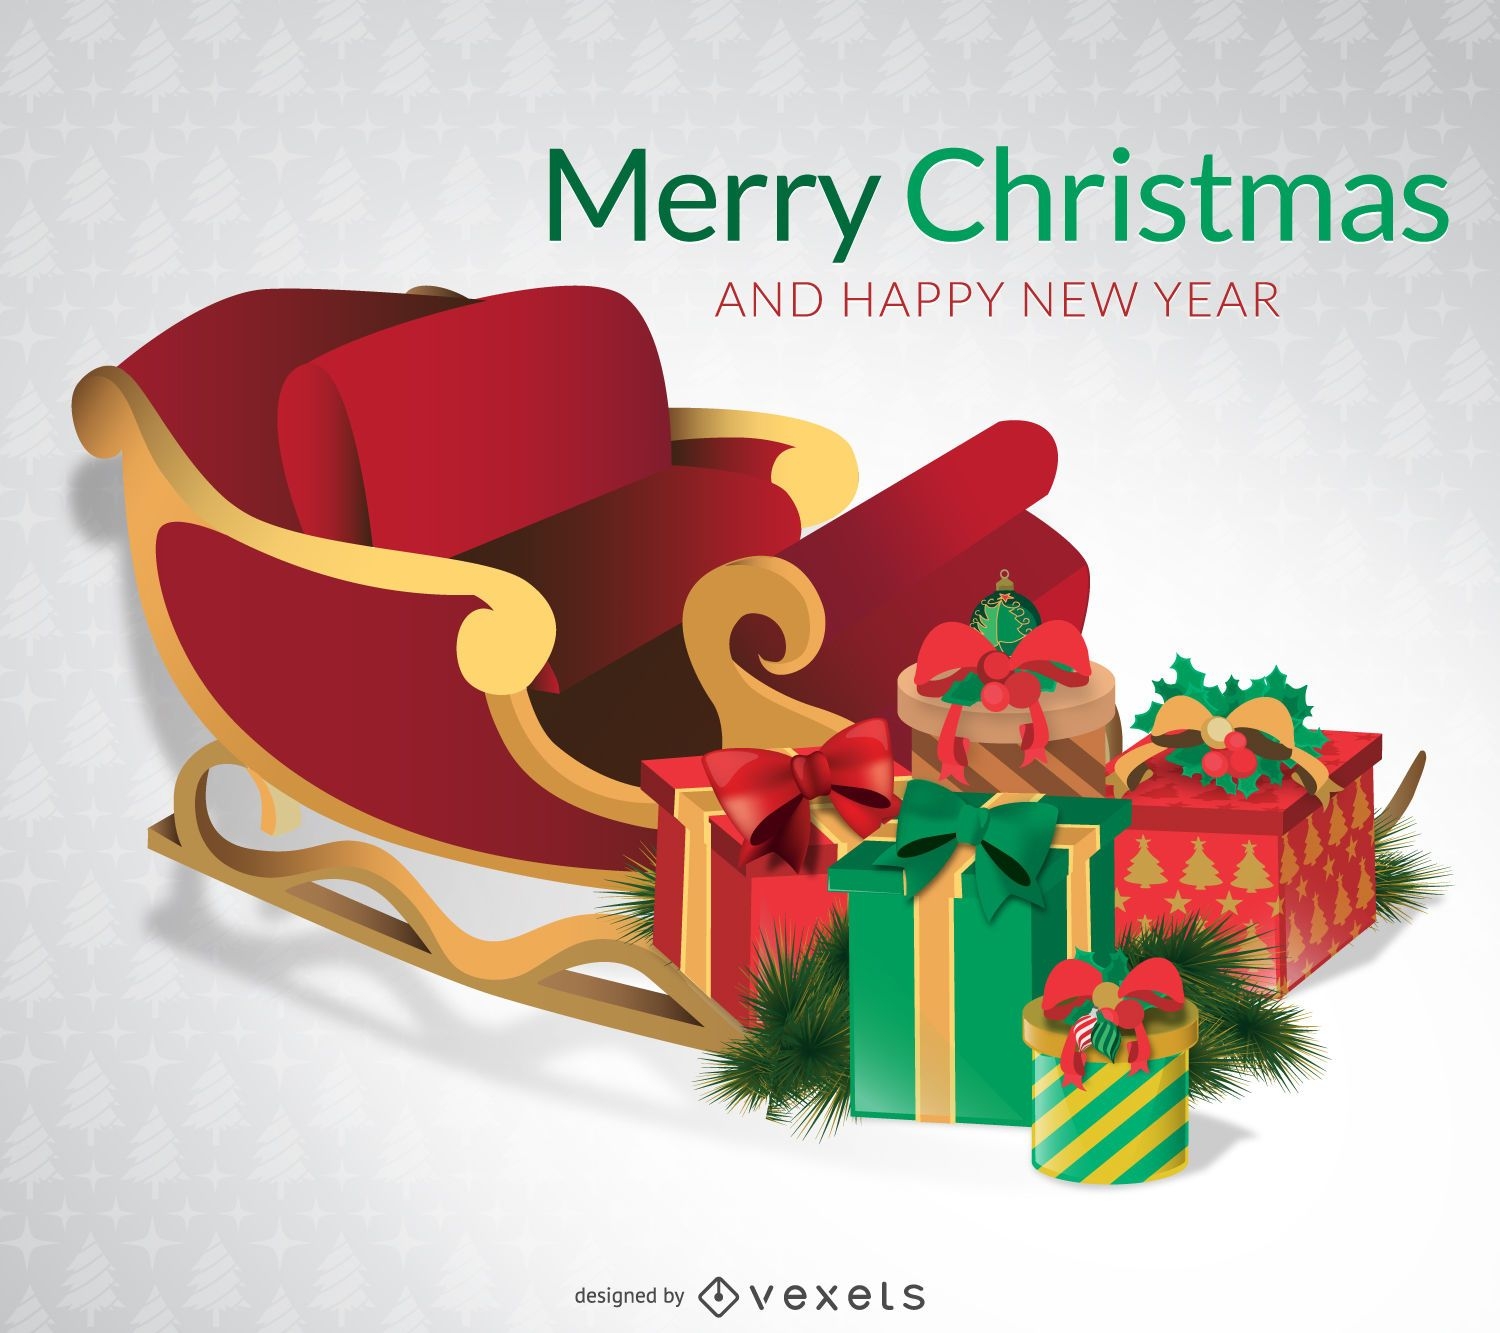 Merry Christmas card with sleigh